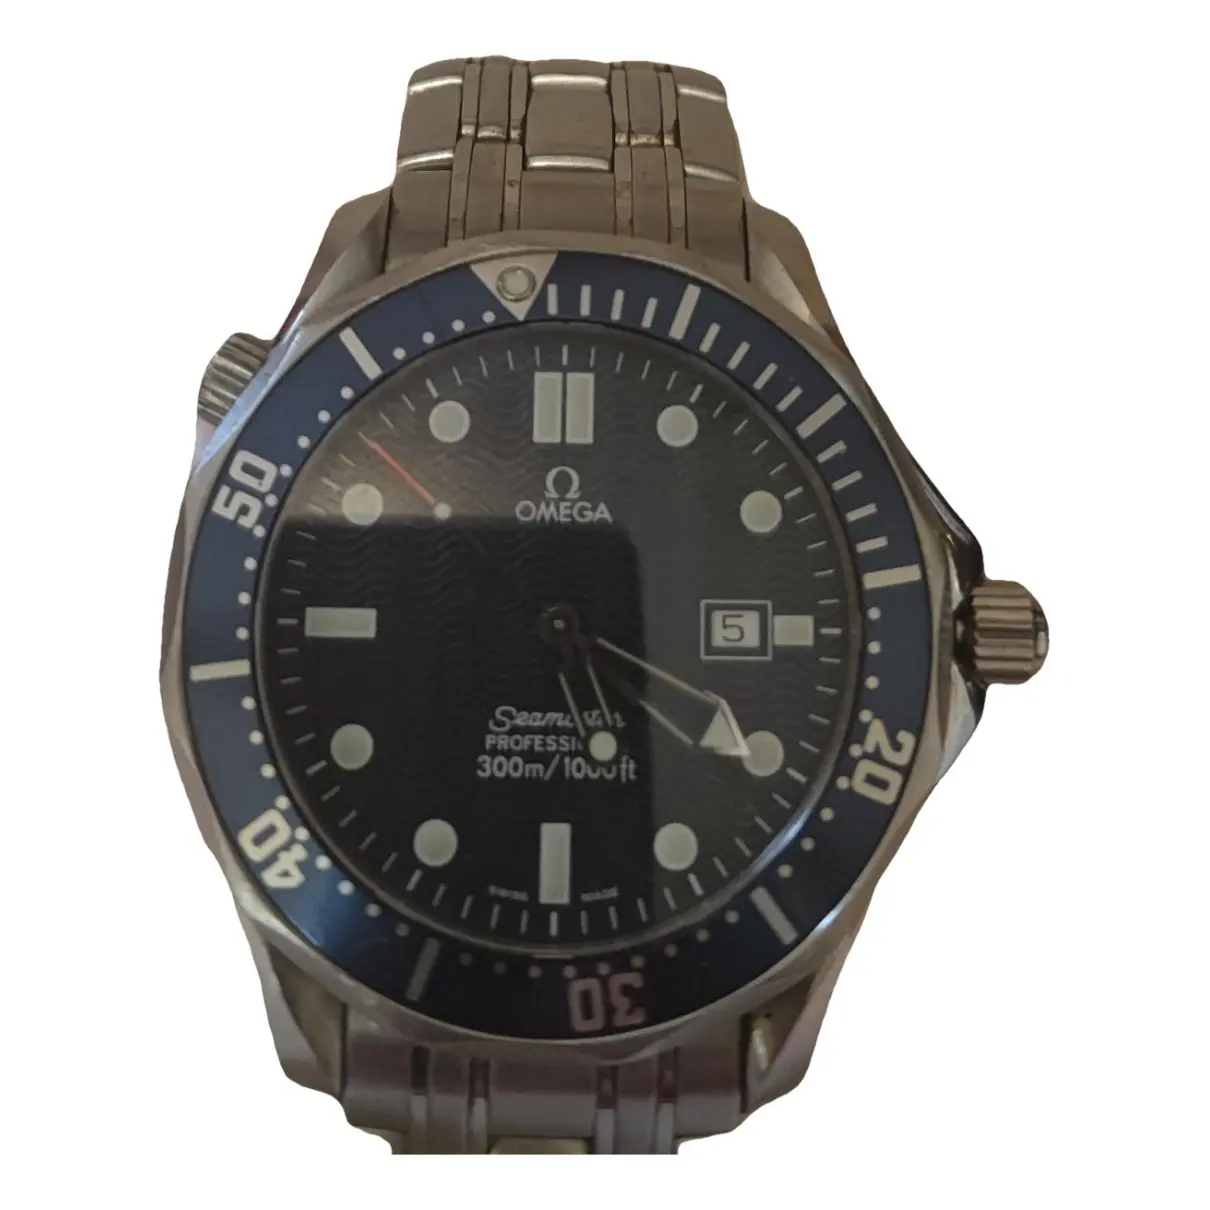 Seamaster 300 watch